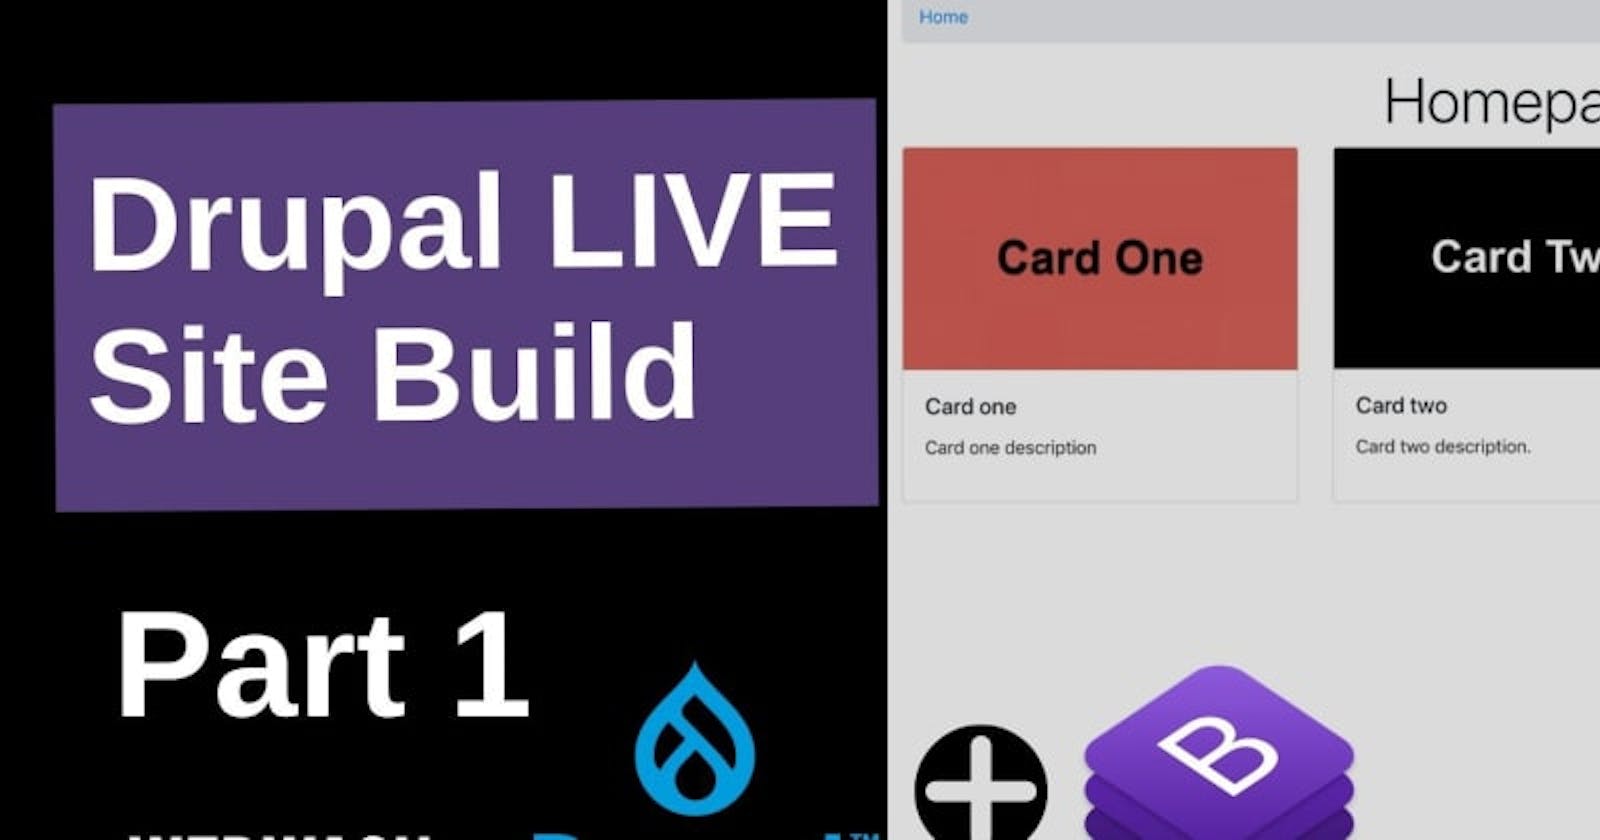 Drupal Live Site Build (Part 1) – Project Set Up, Build Bootstrap Card Component using Layout Builder